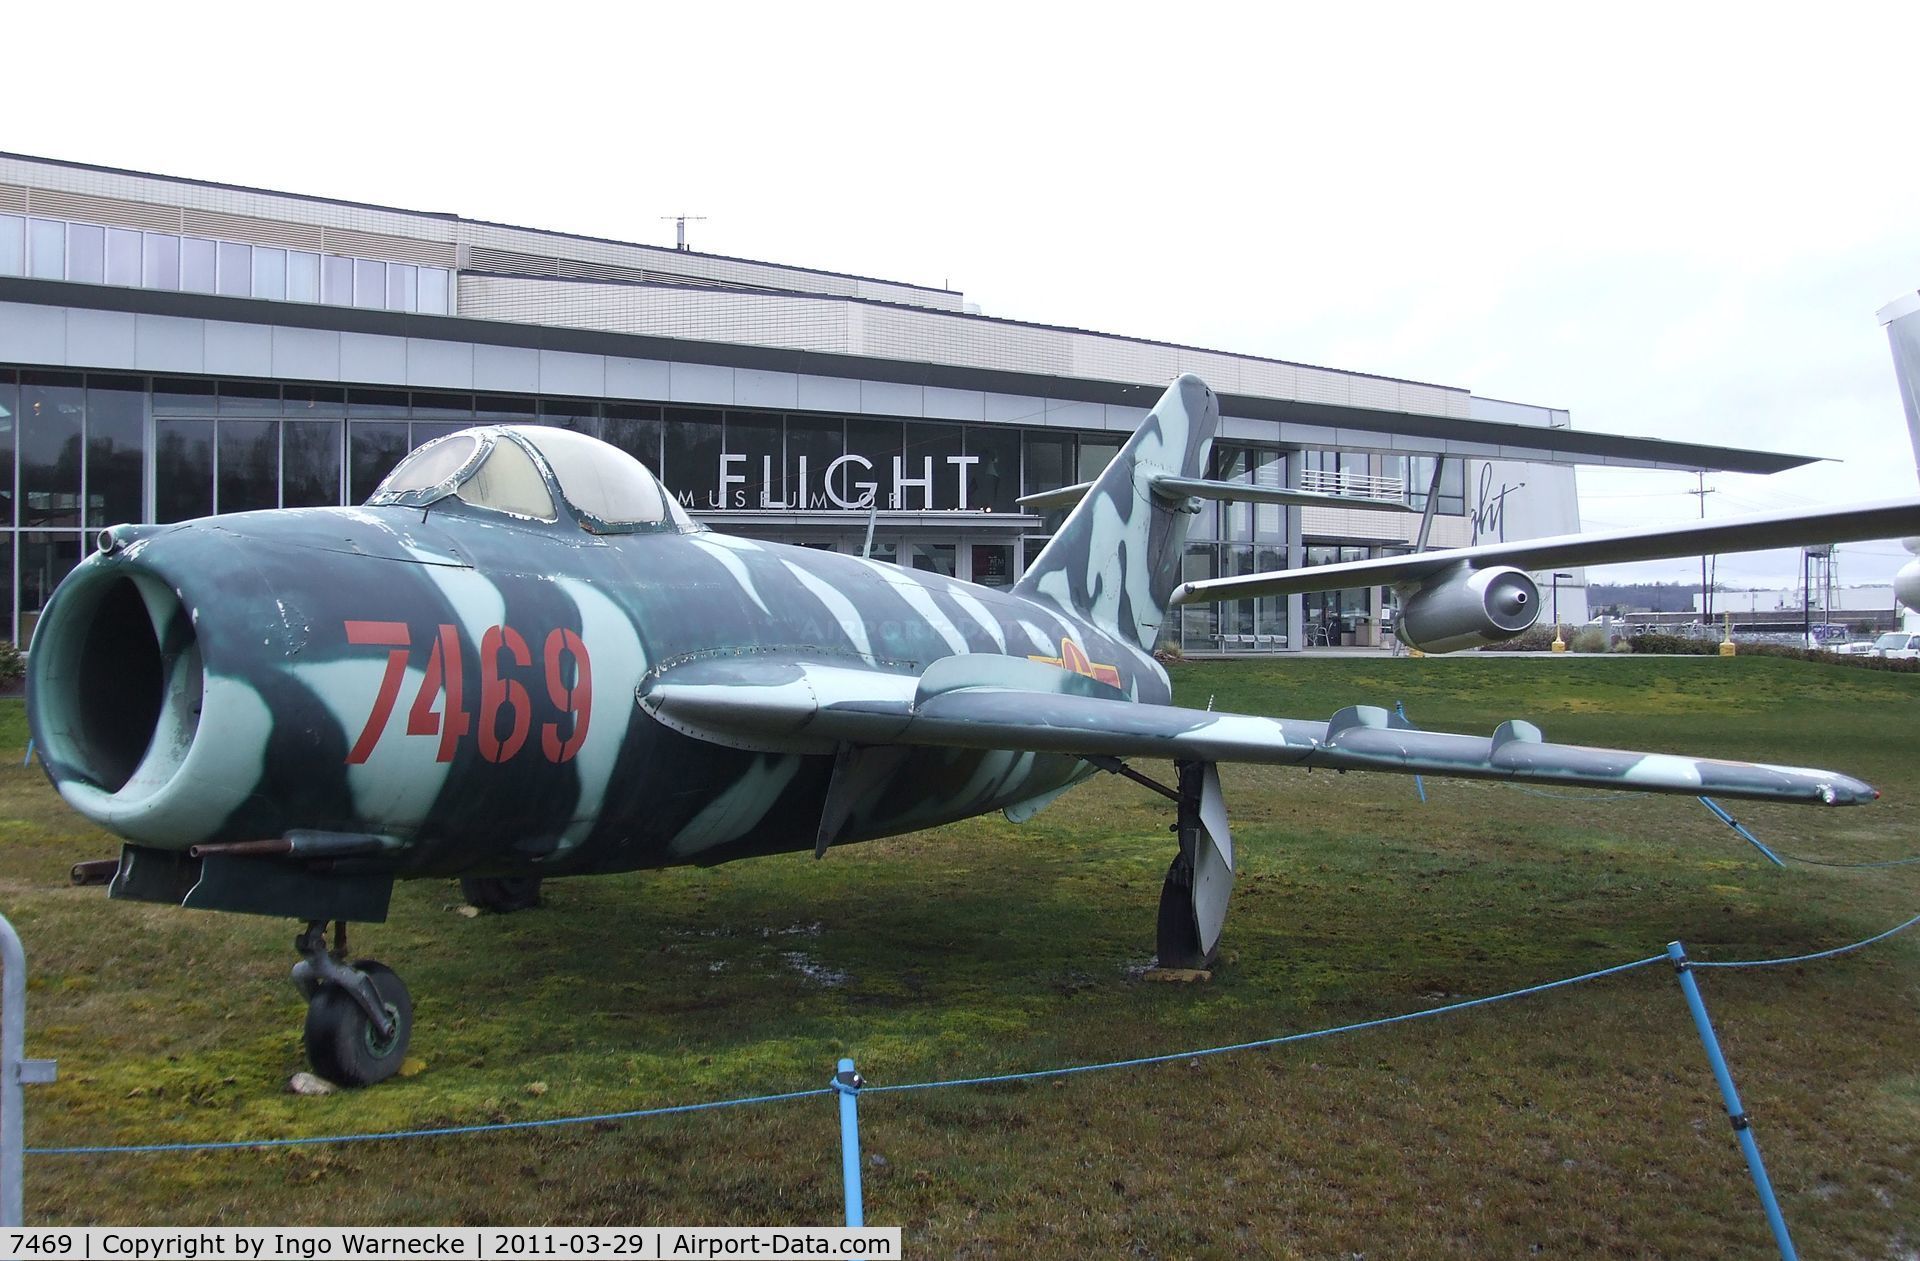 7469, Mikoyan-Gurevich MiG-17F C/N 1406016, Mikoyan i Gurevich MiG-17F FRESCO-C at the Museum of Flight, Seattle WA